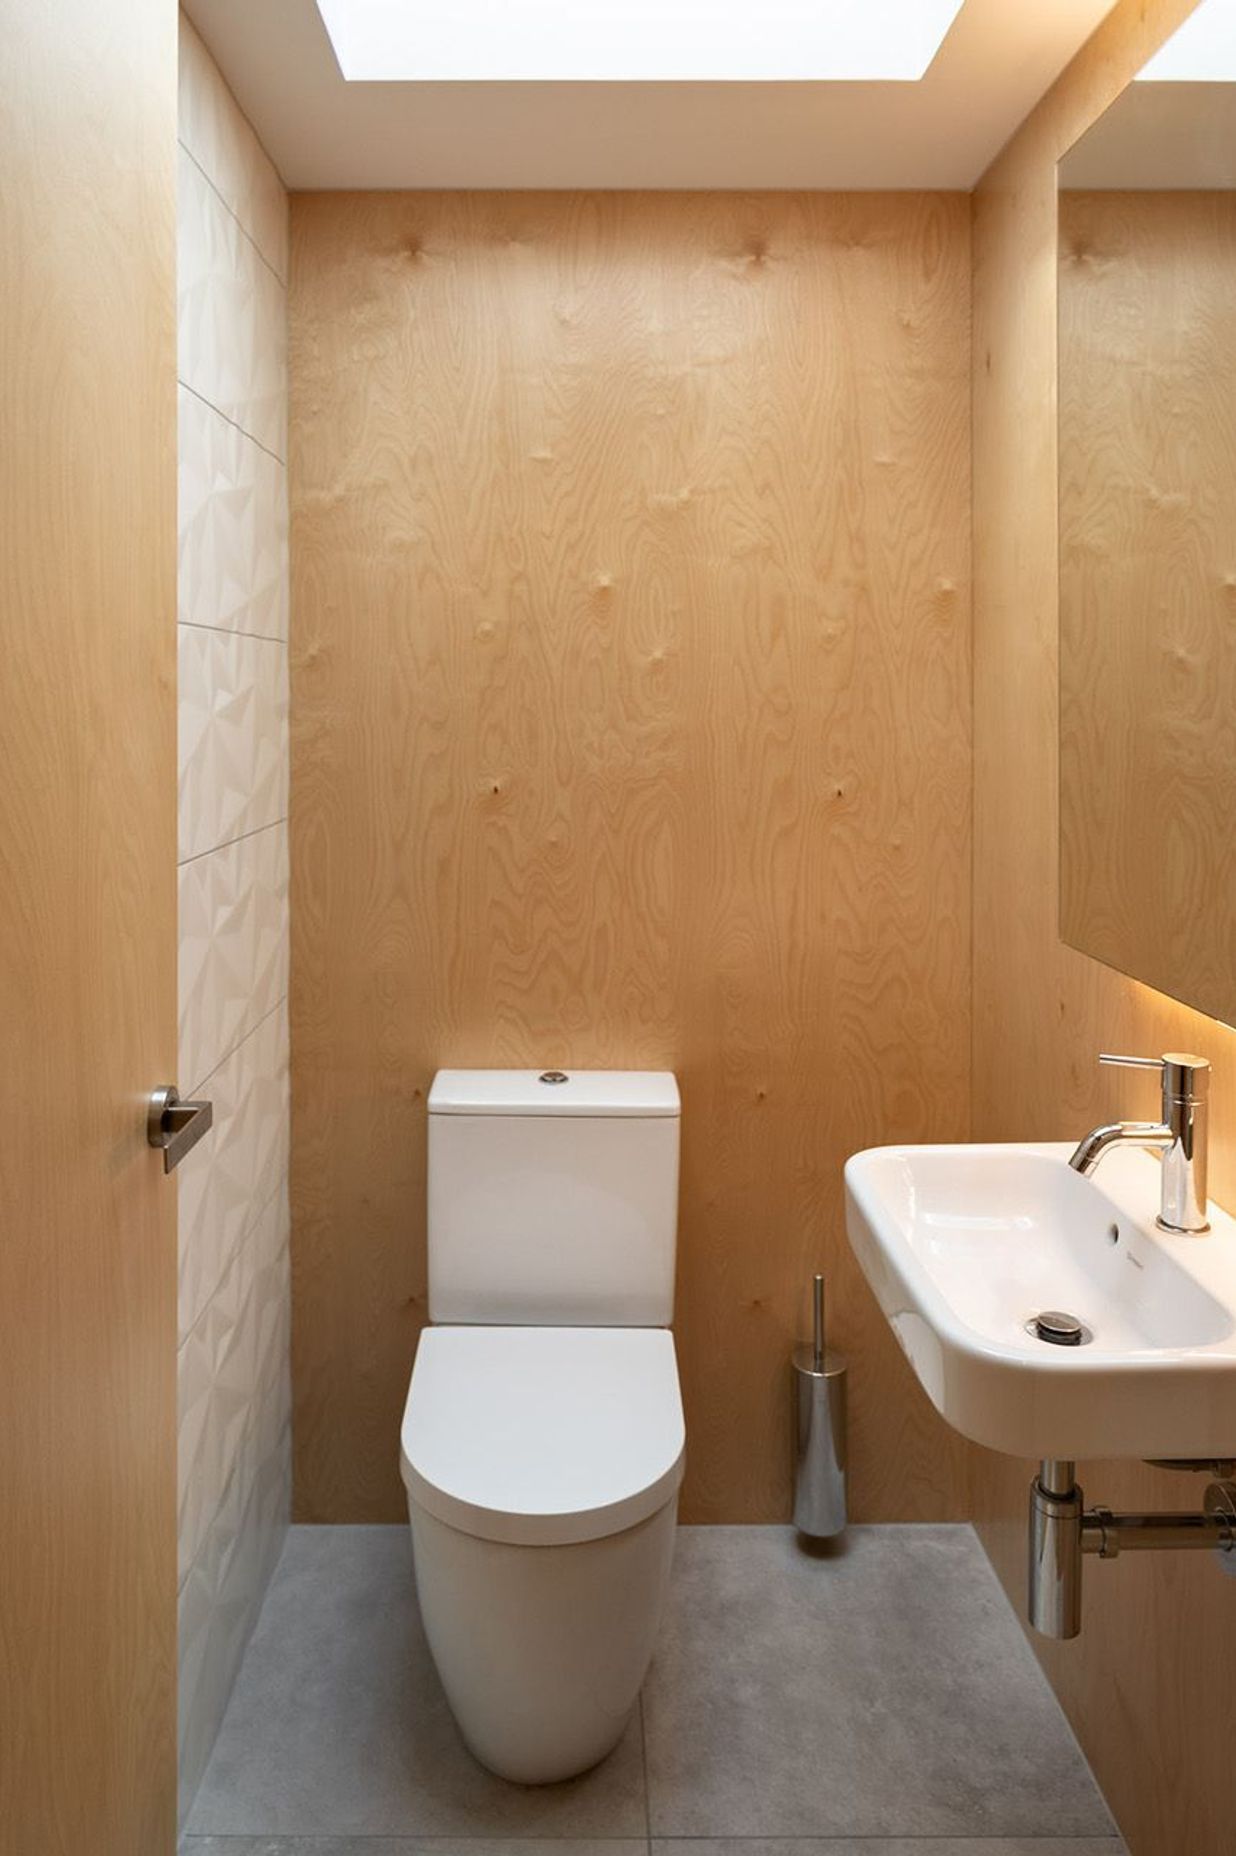 The timber-lined toilet. Photograph: Simon Devitt.